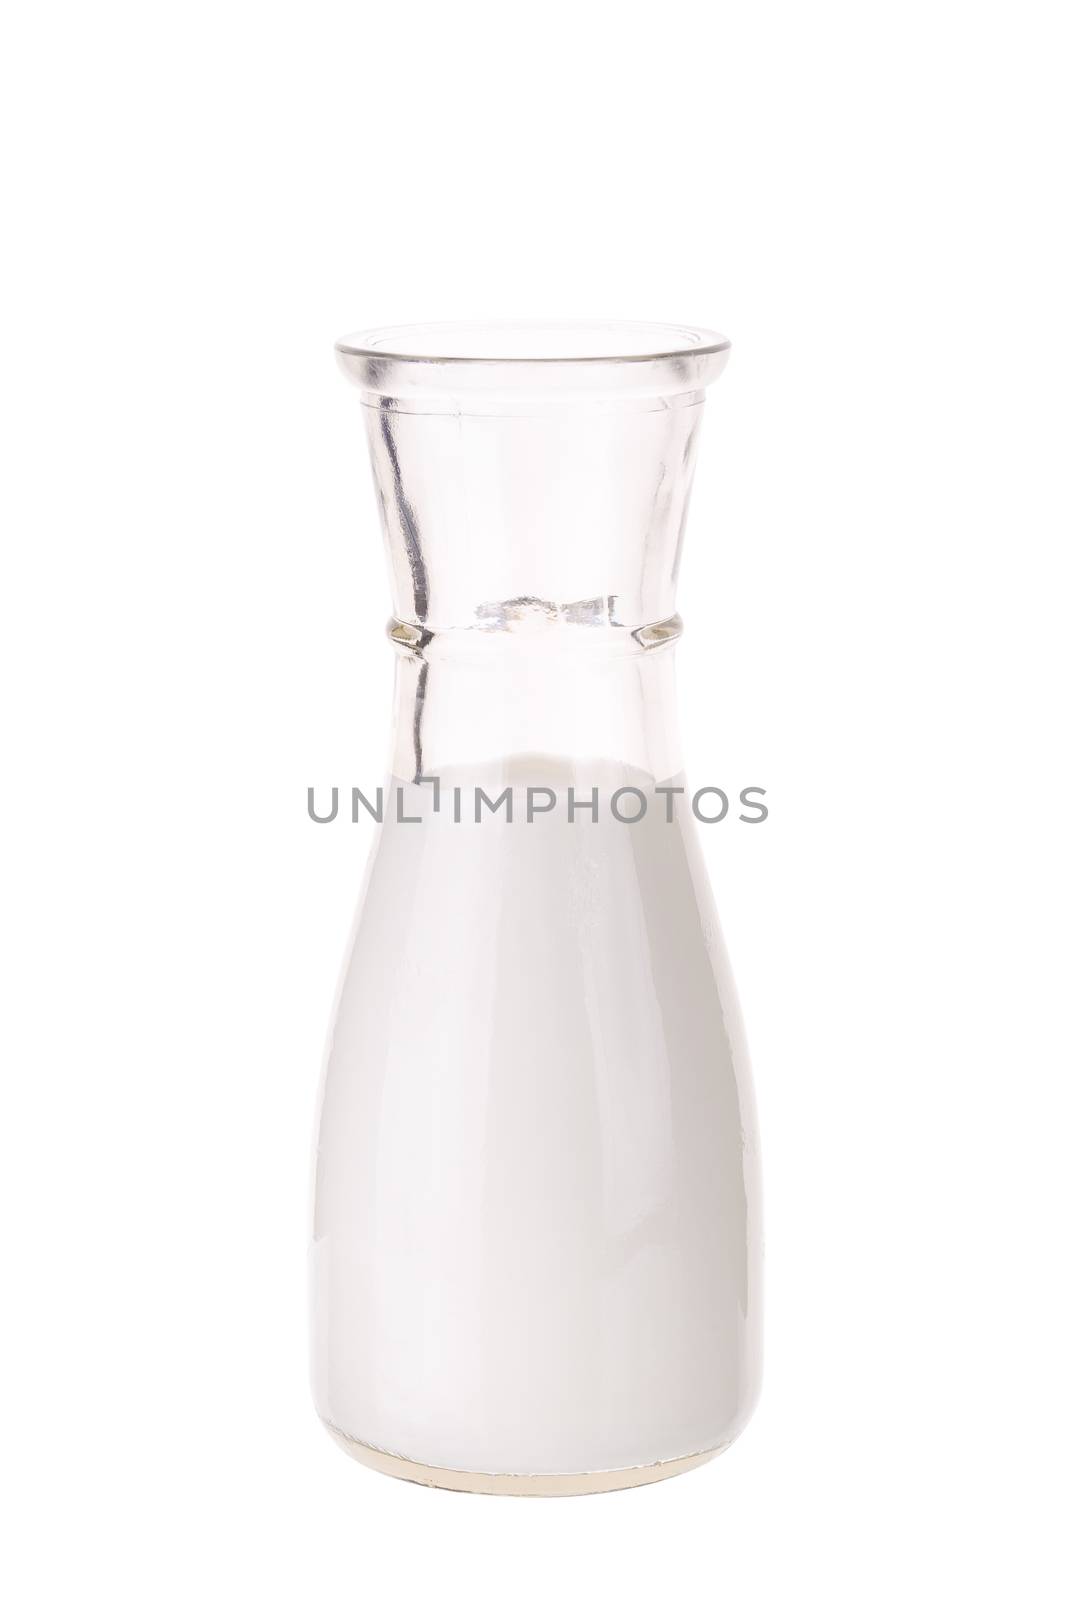 Glass Milk Bottle isolated on white background. by kaiskynet